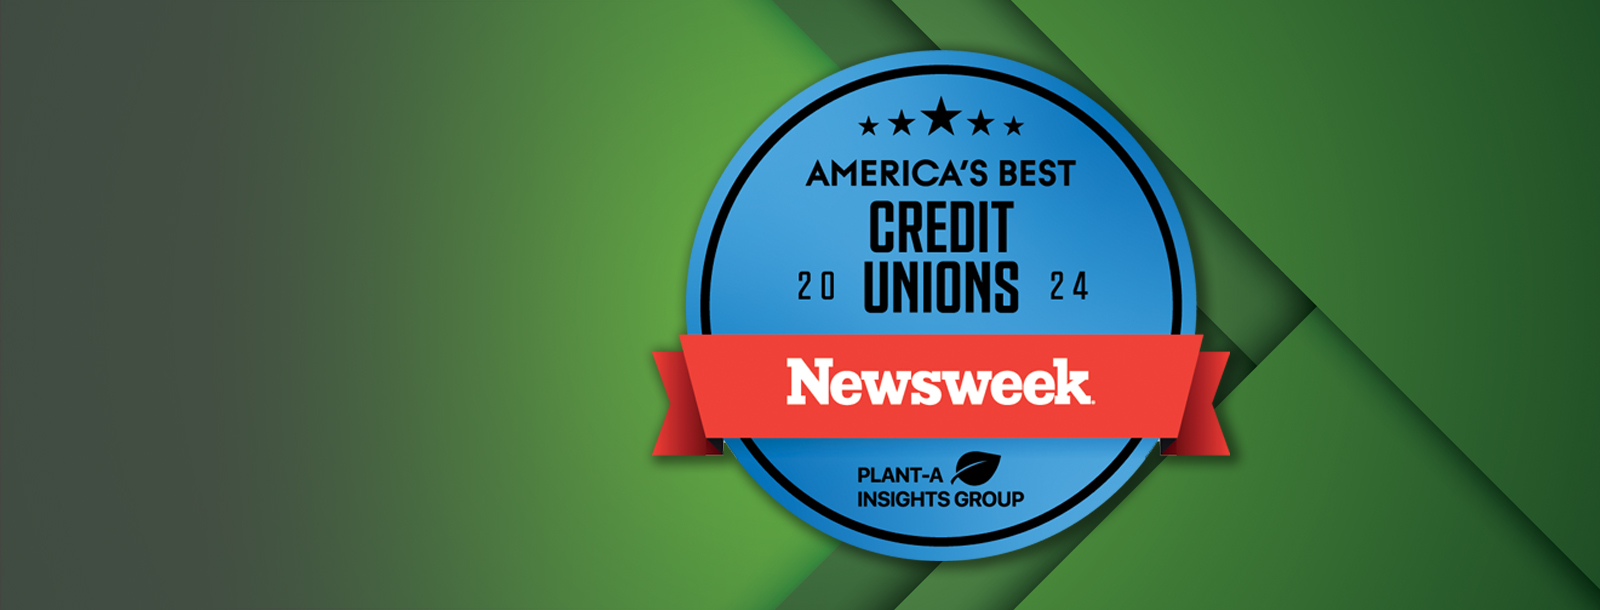 Newsweek America's Best Credit Union | Team One Credit Union